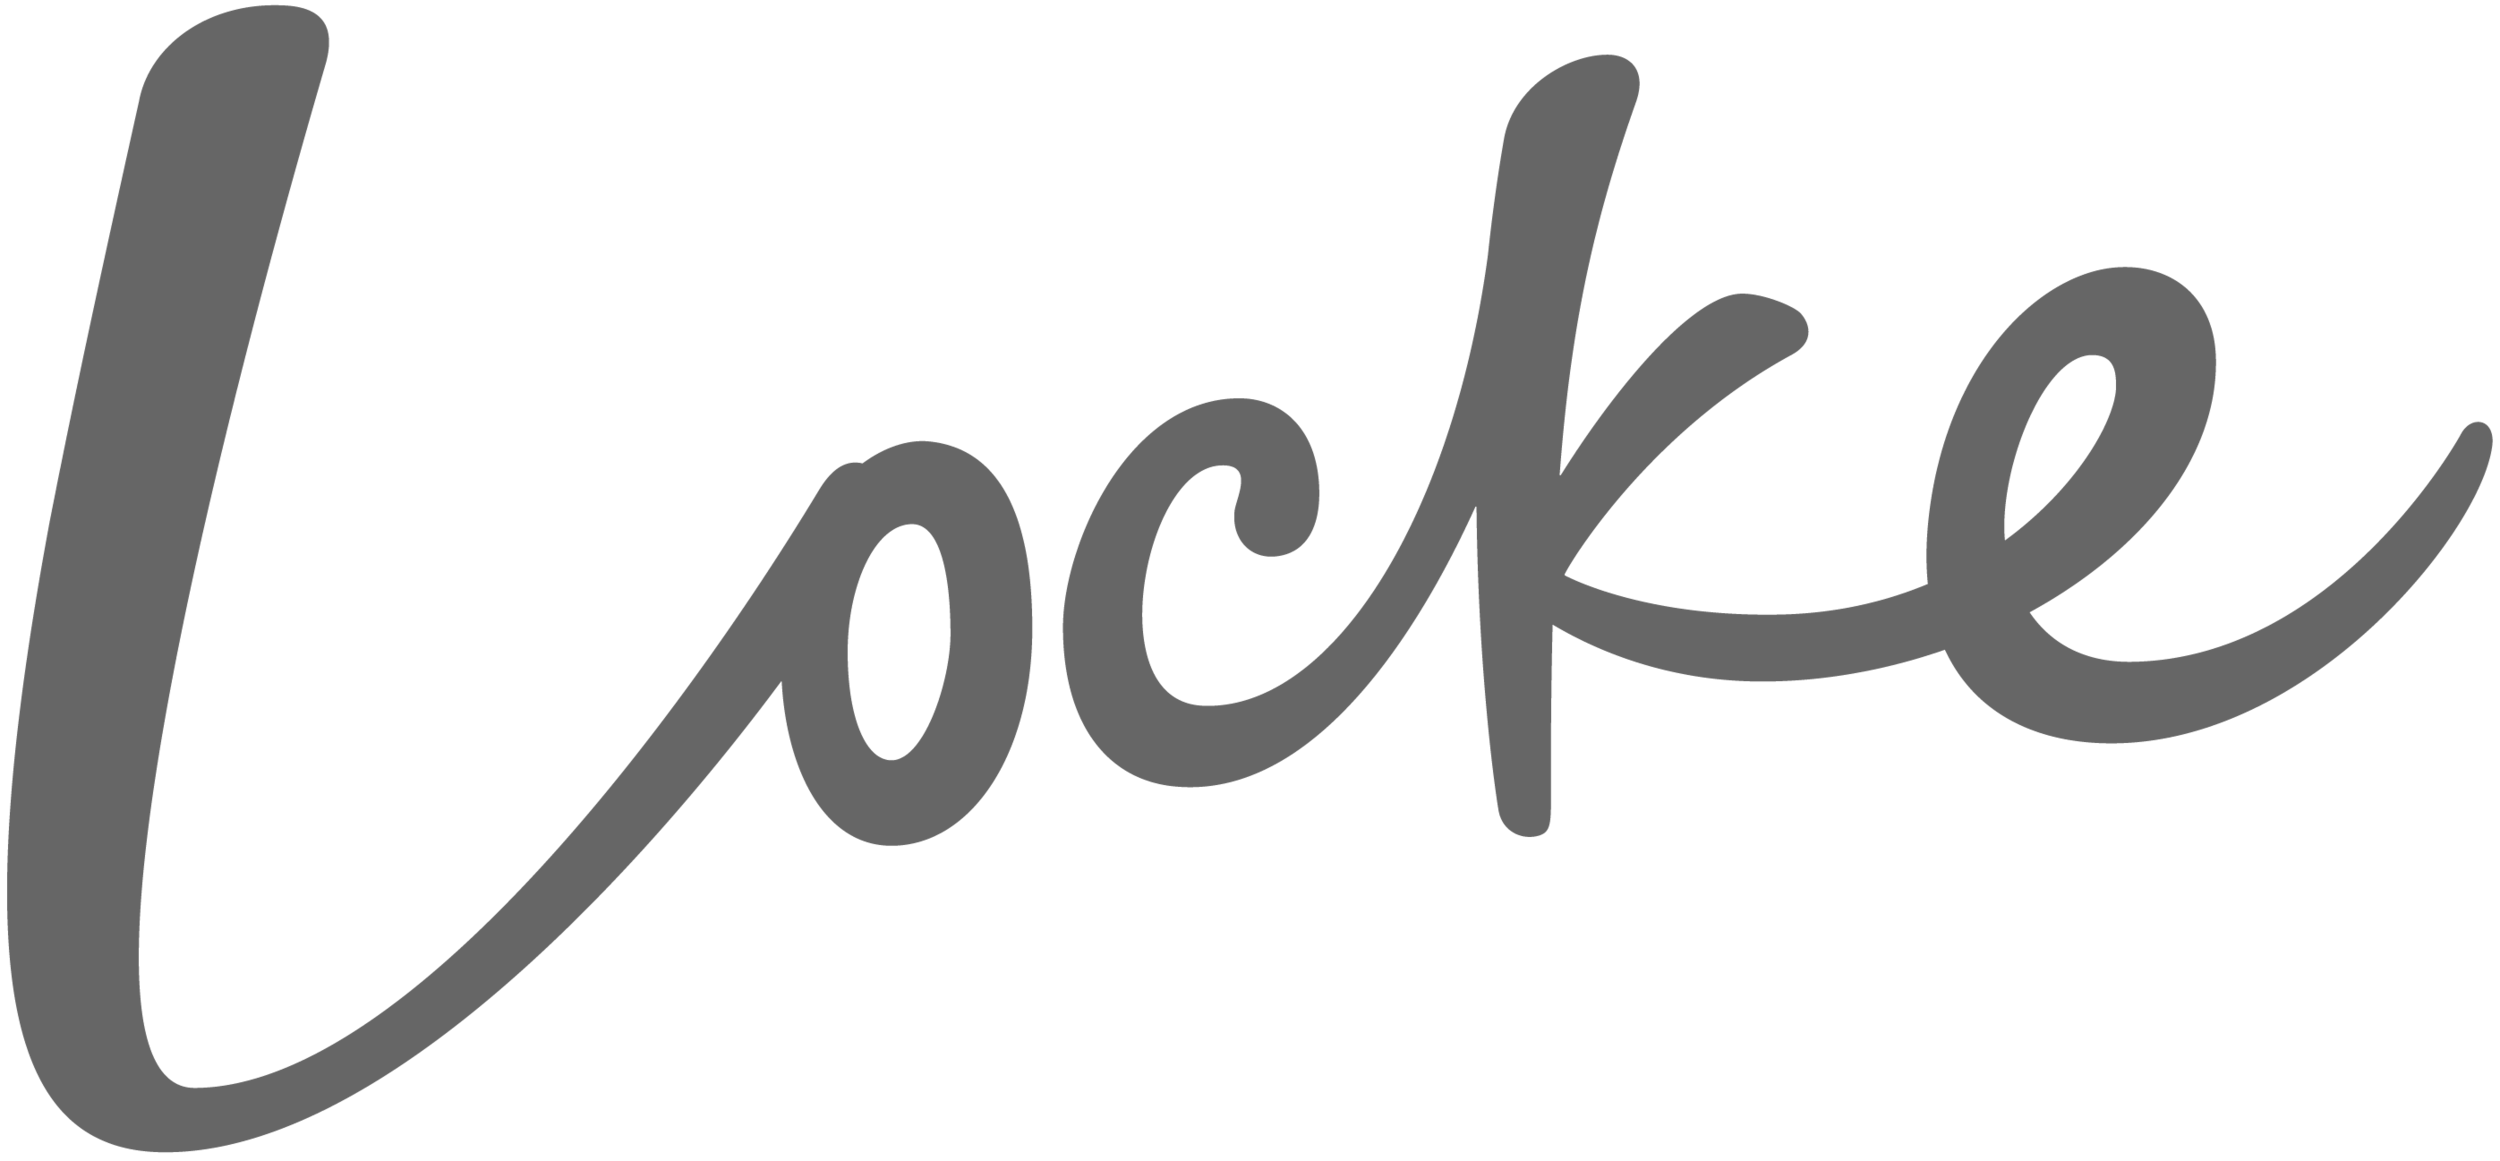 Locke Hotels Logo.png